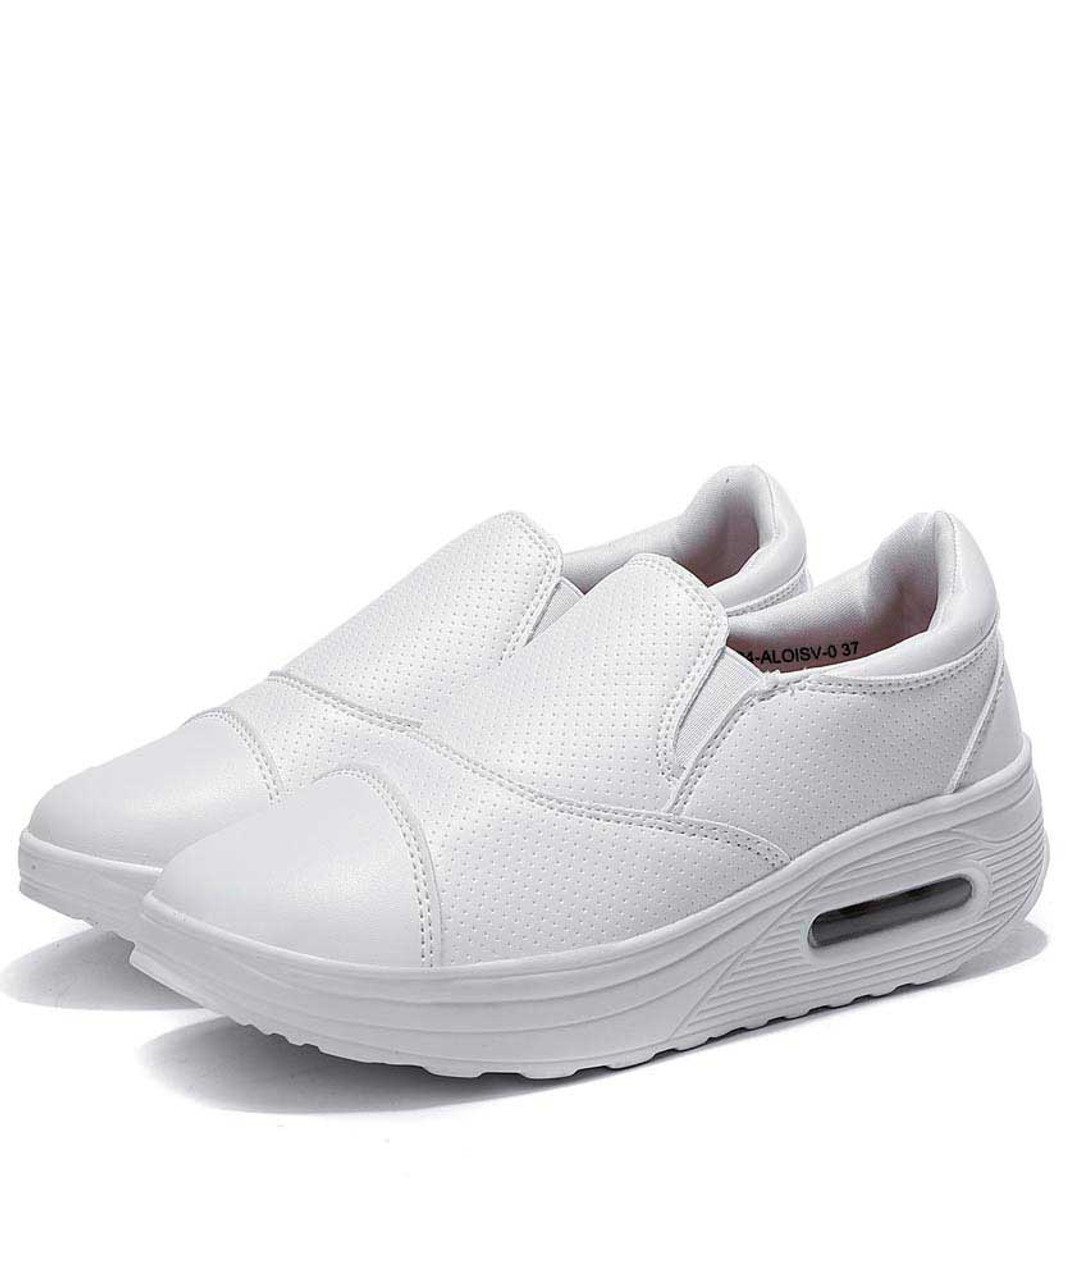 White slip on rocker bottom shoe sneaker in plain | Womens rocker shoes ...